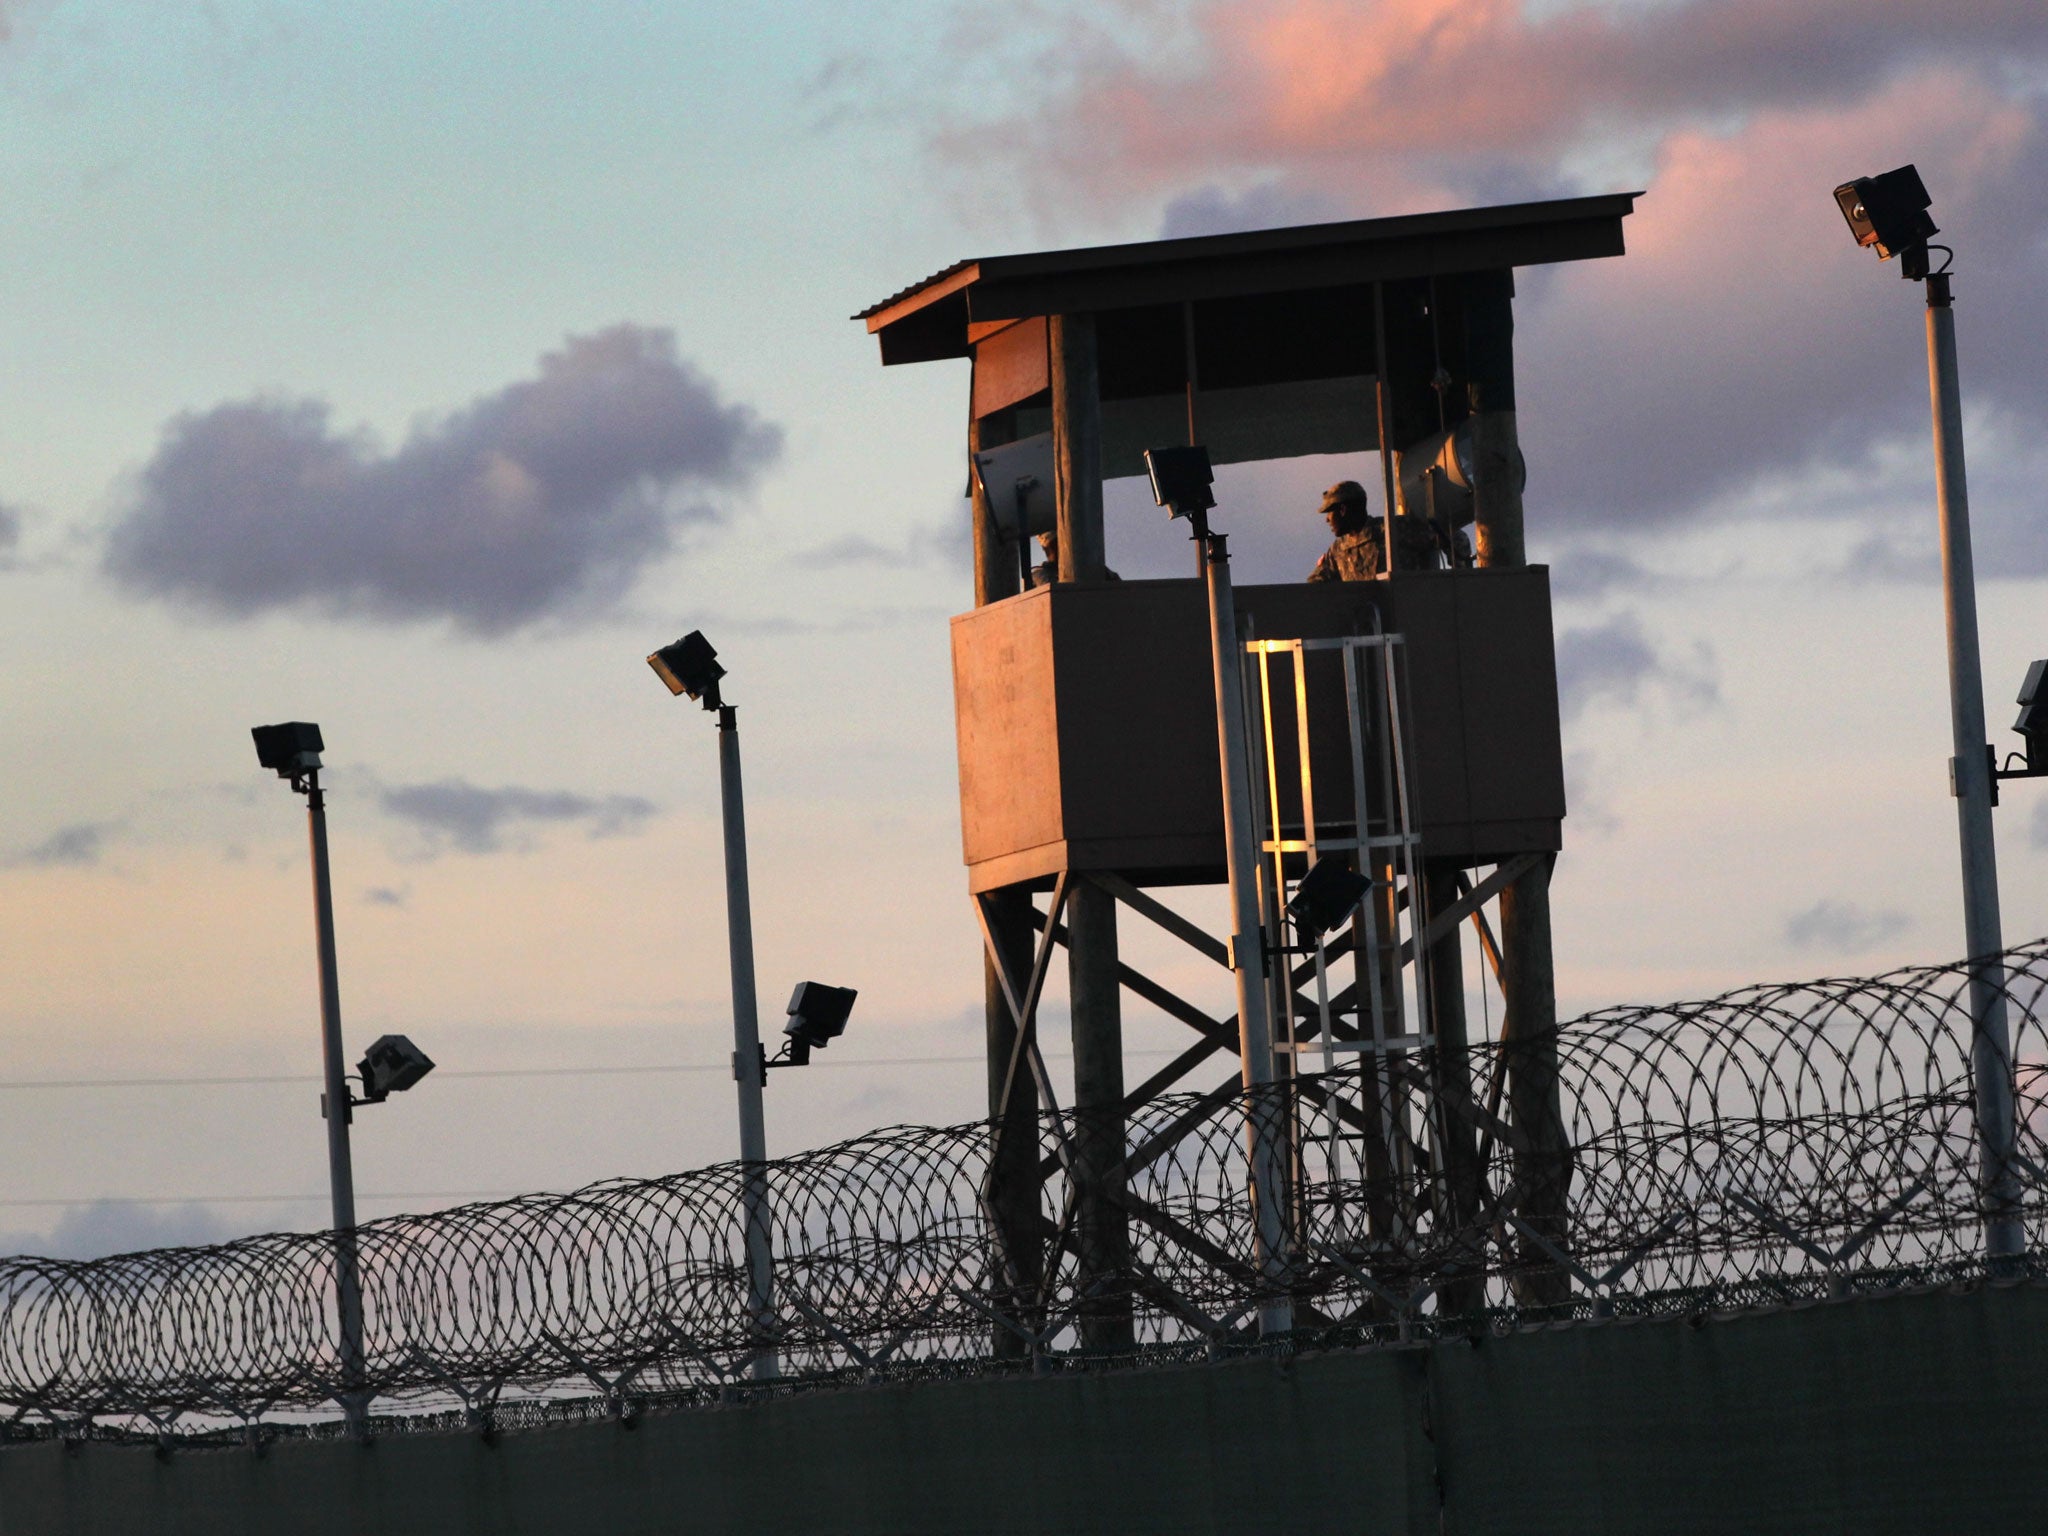 'Guantanamo is causing more problems than it solves' has said Harry Ferguson